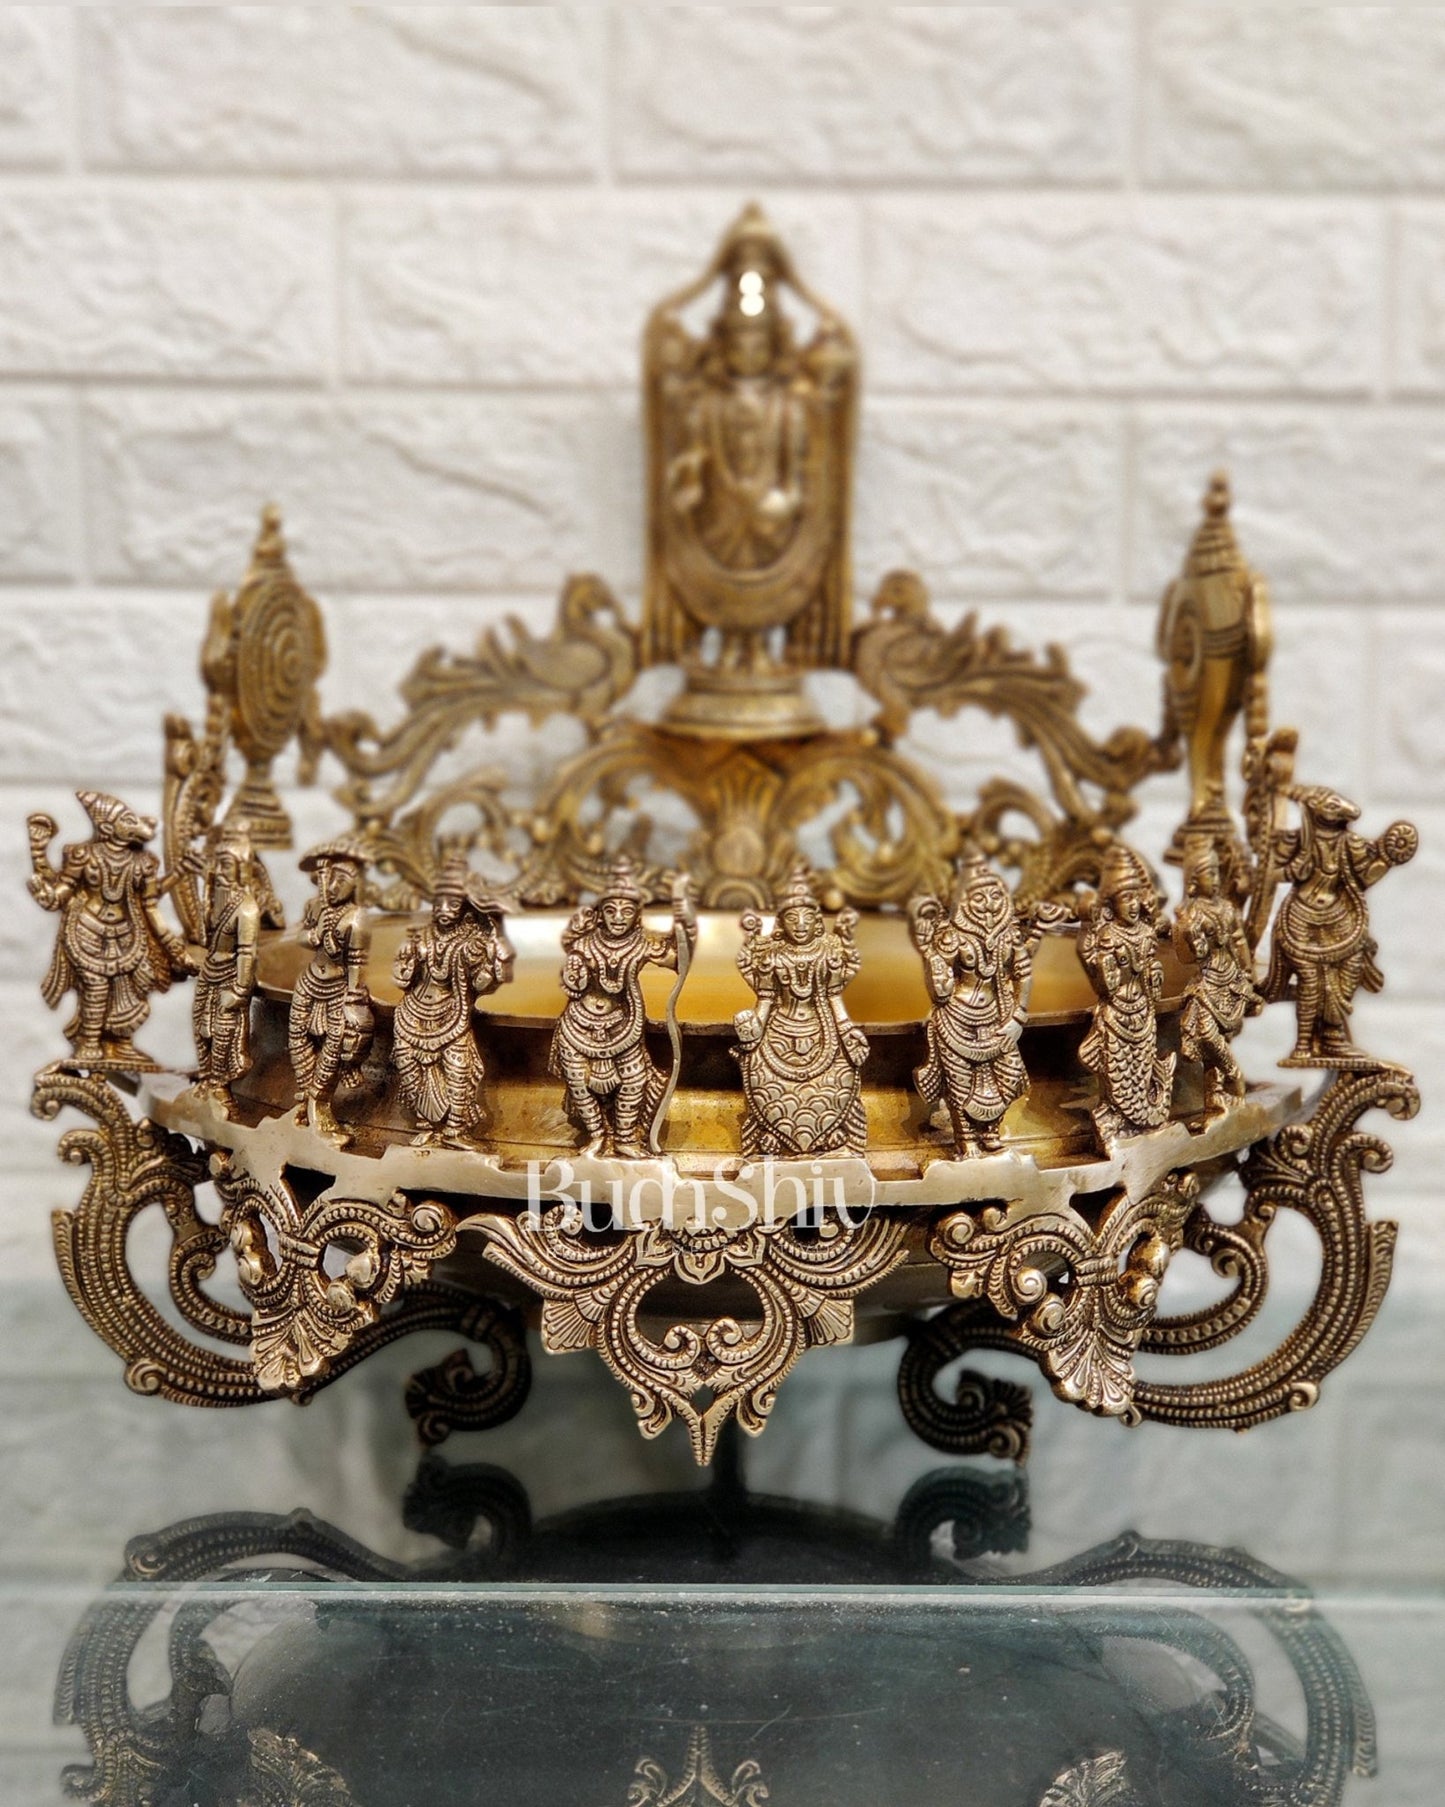 Dashavatar Pure Brass Urli large - Budhshiv.com